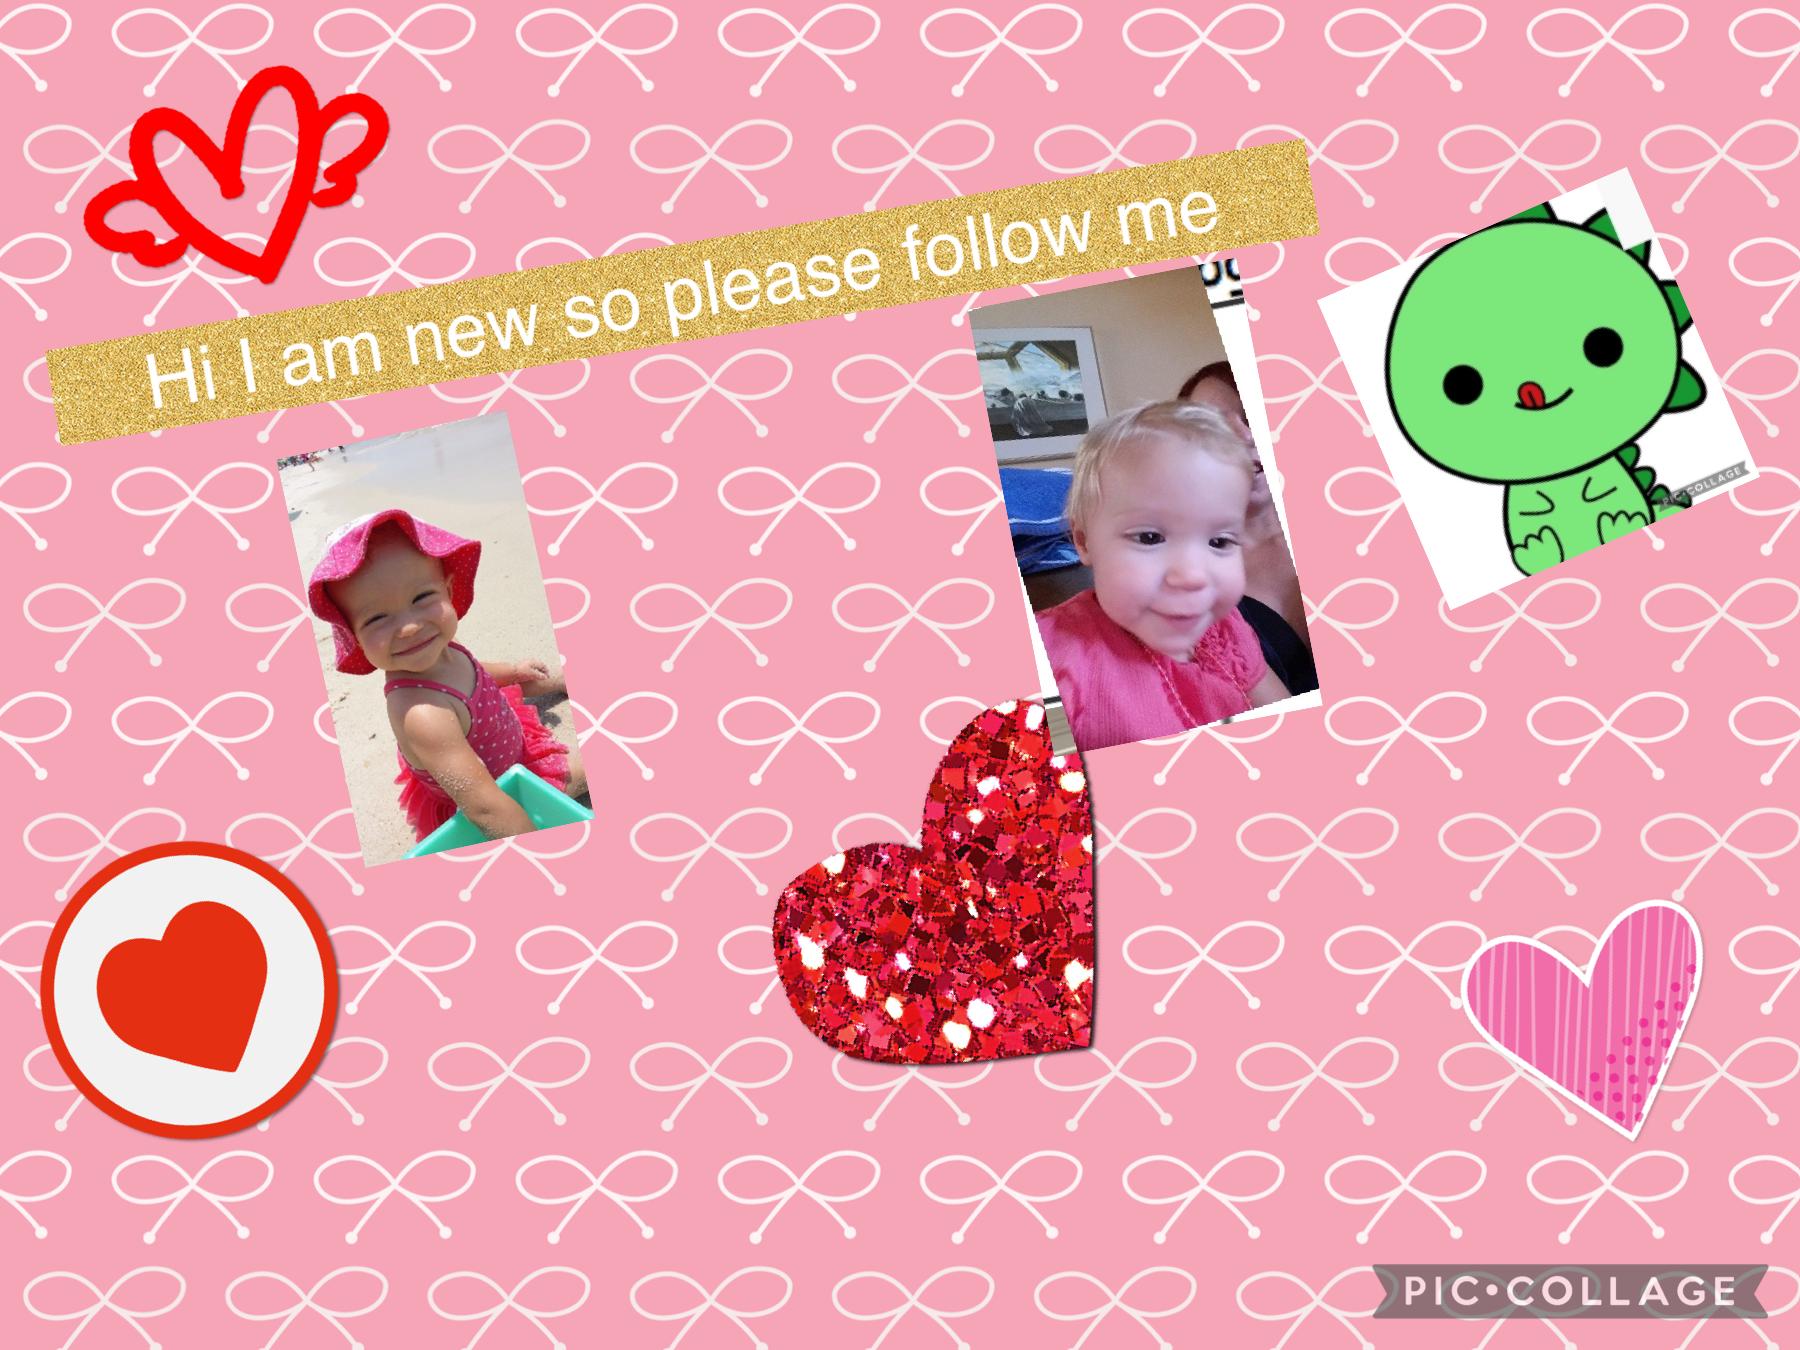 Please follow me 😇😇😇😇😇